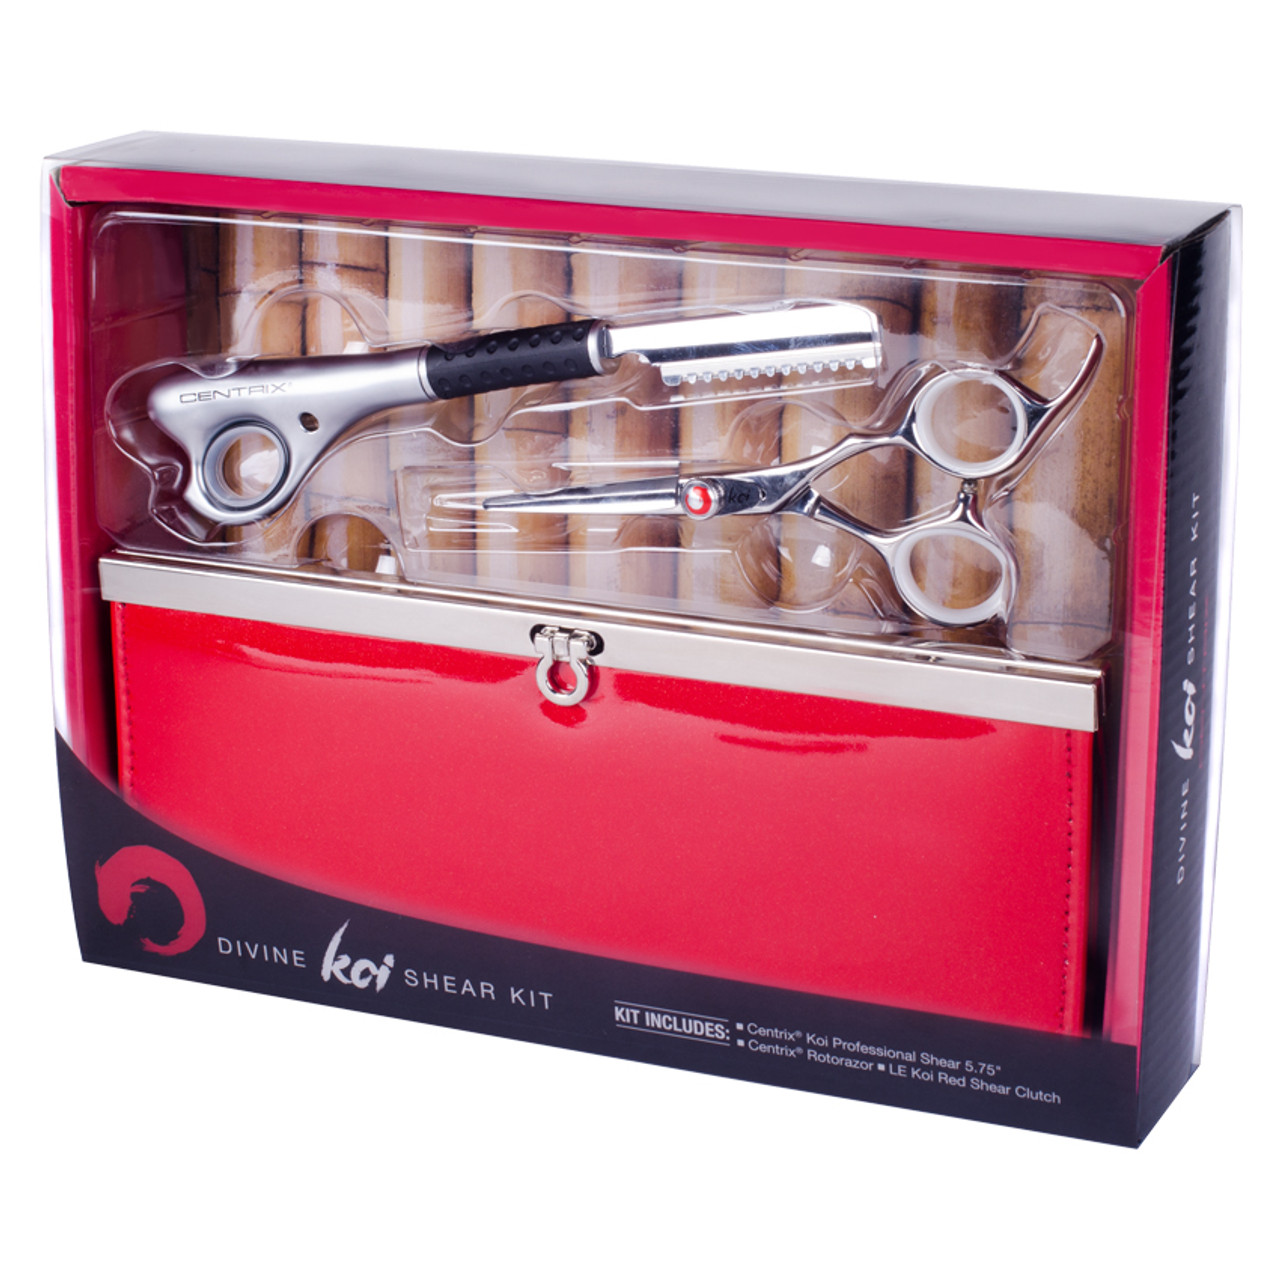 Hair Cutting Scissors Kits, Hairdressing Shears Set Professional Thinning  Scissors - pink